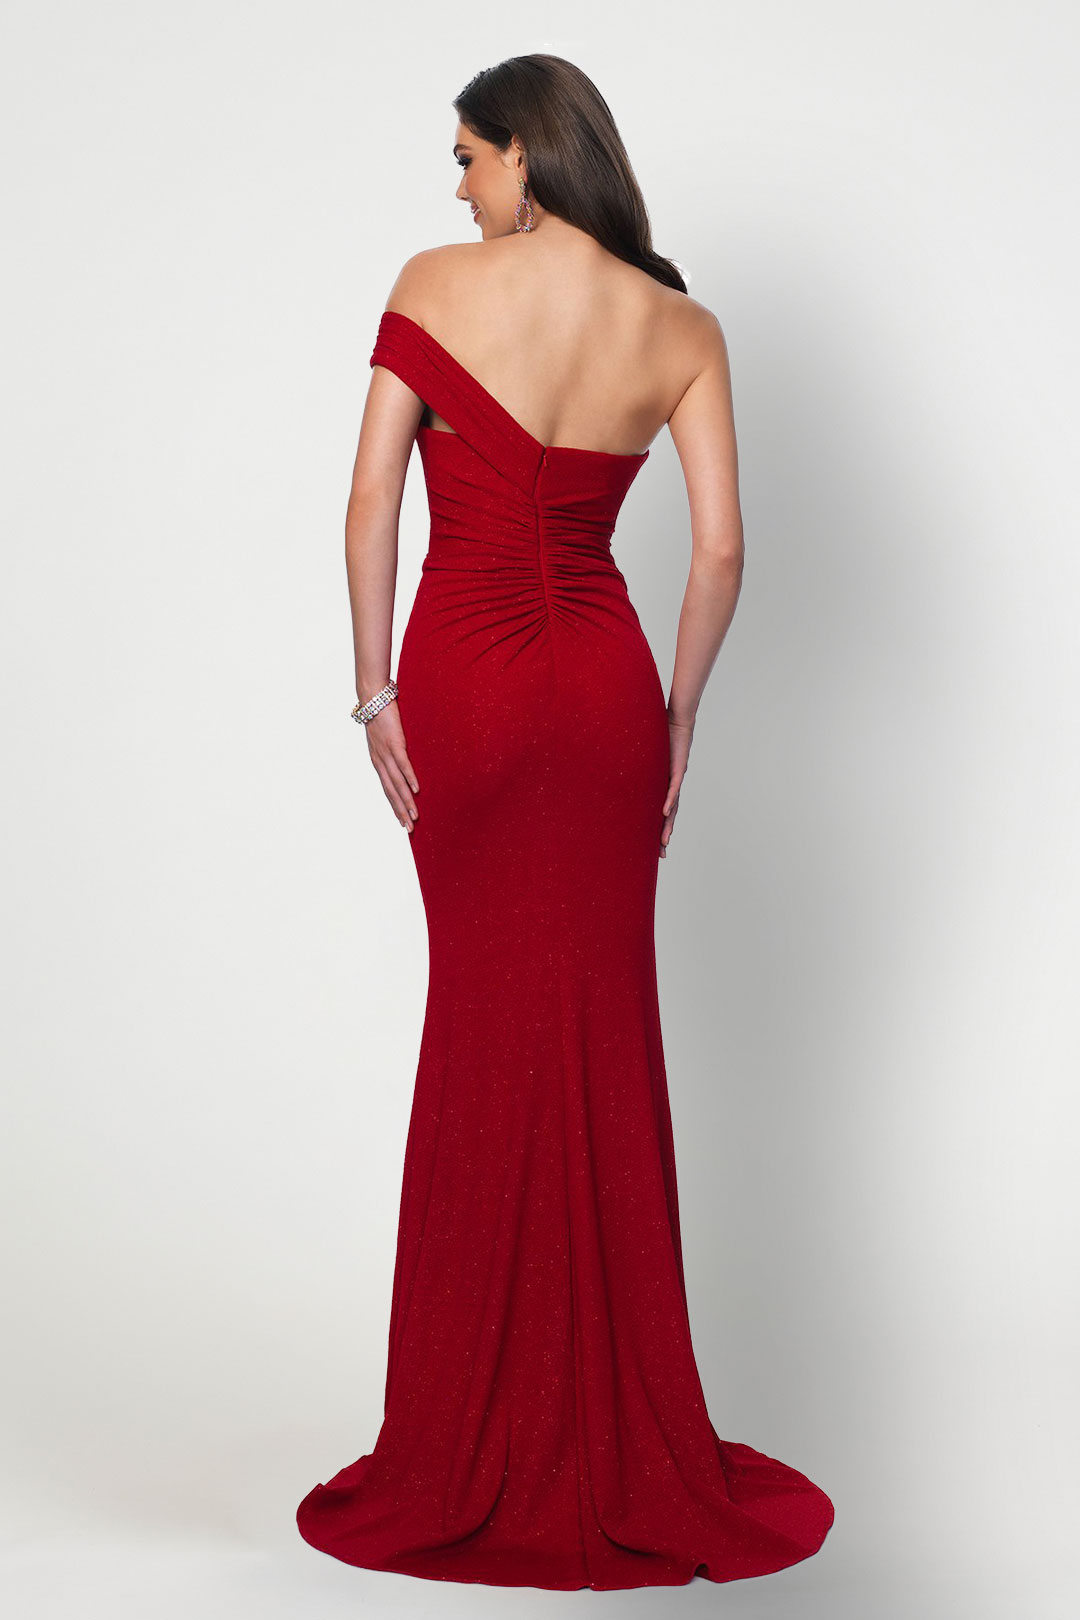 Red Glitter Gown - Blush Prom Dress Rental